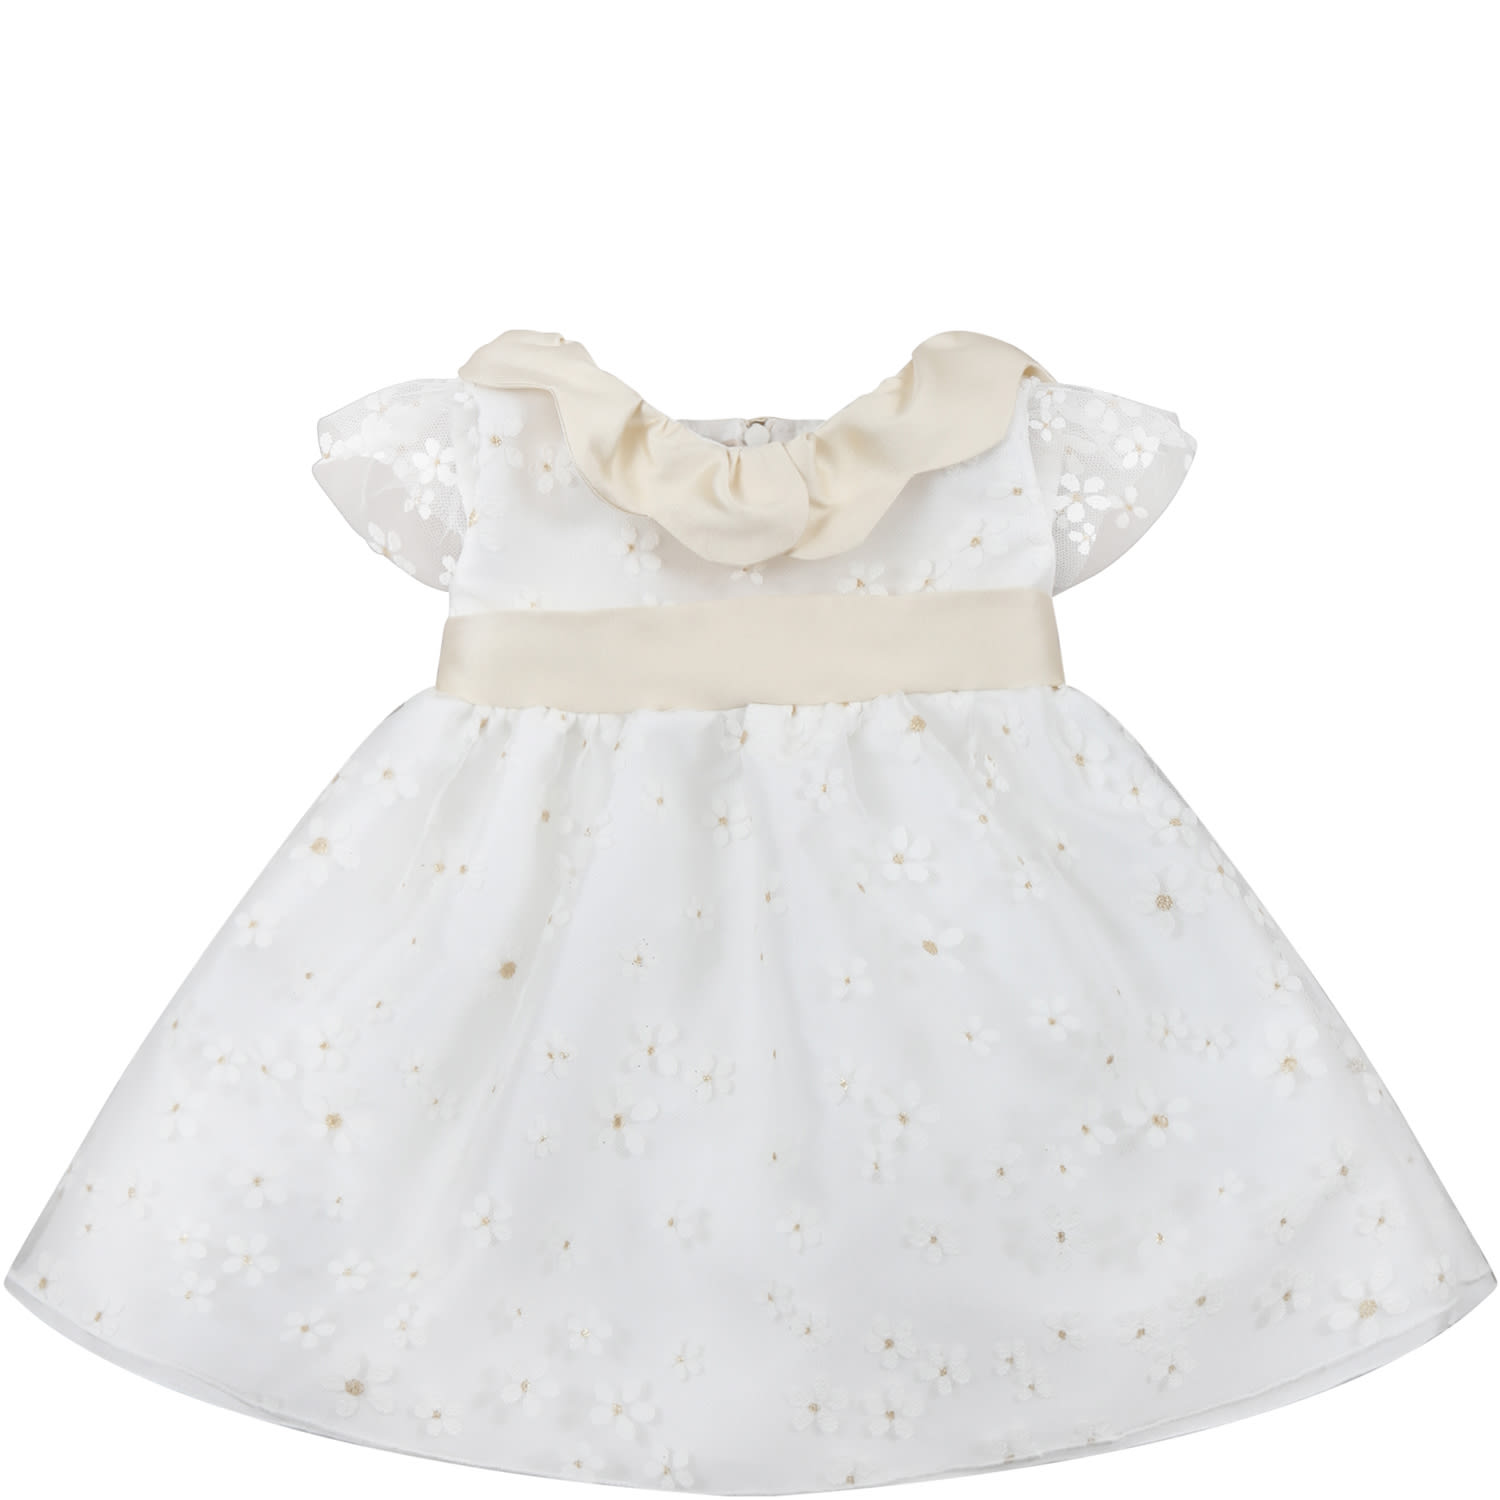 La Stupenderia White Sleeveless Dress For Baby Girl With Daisies